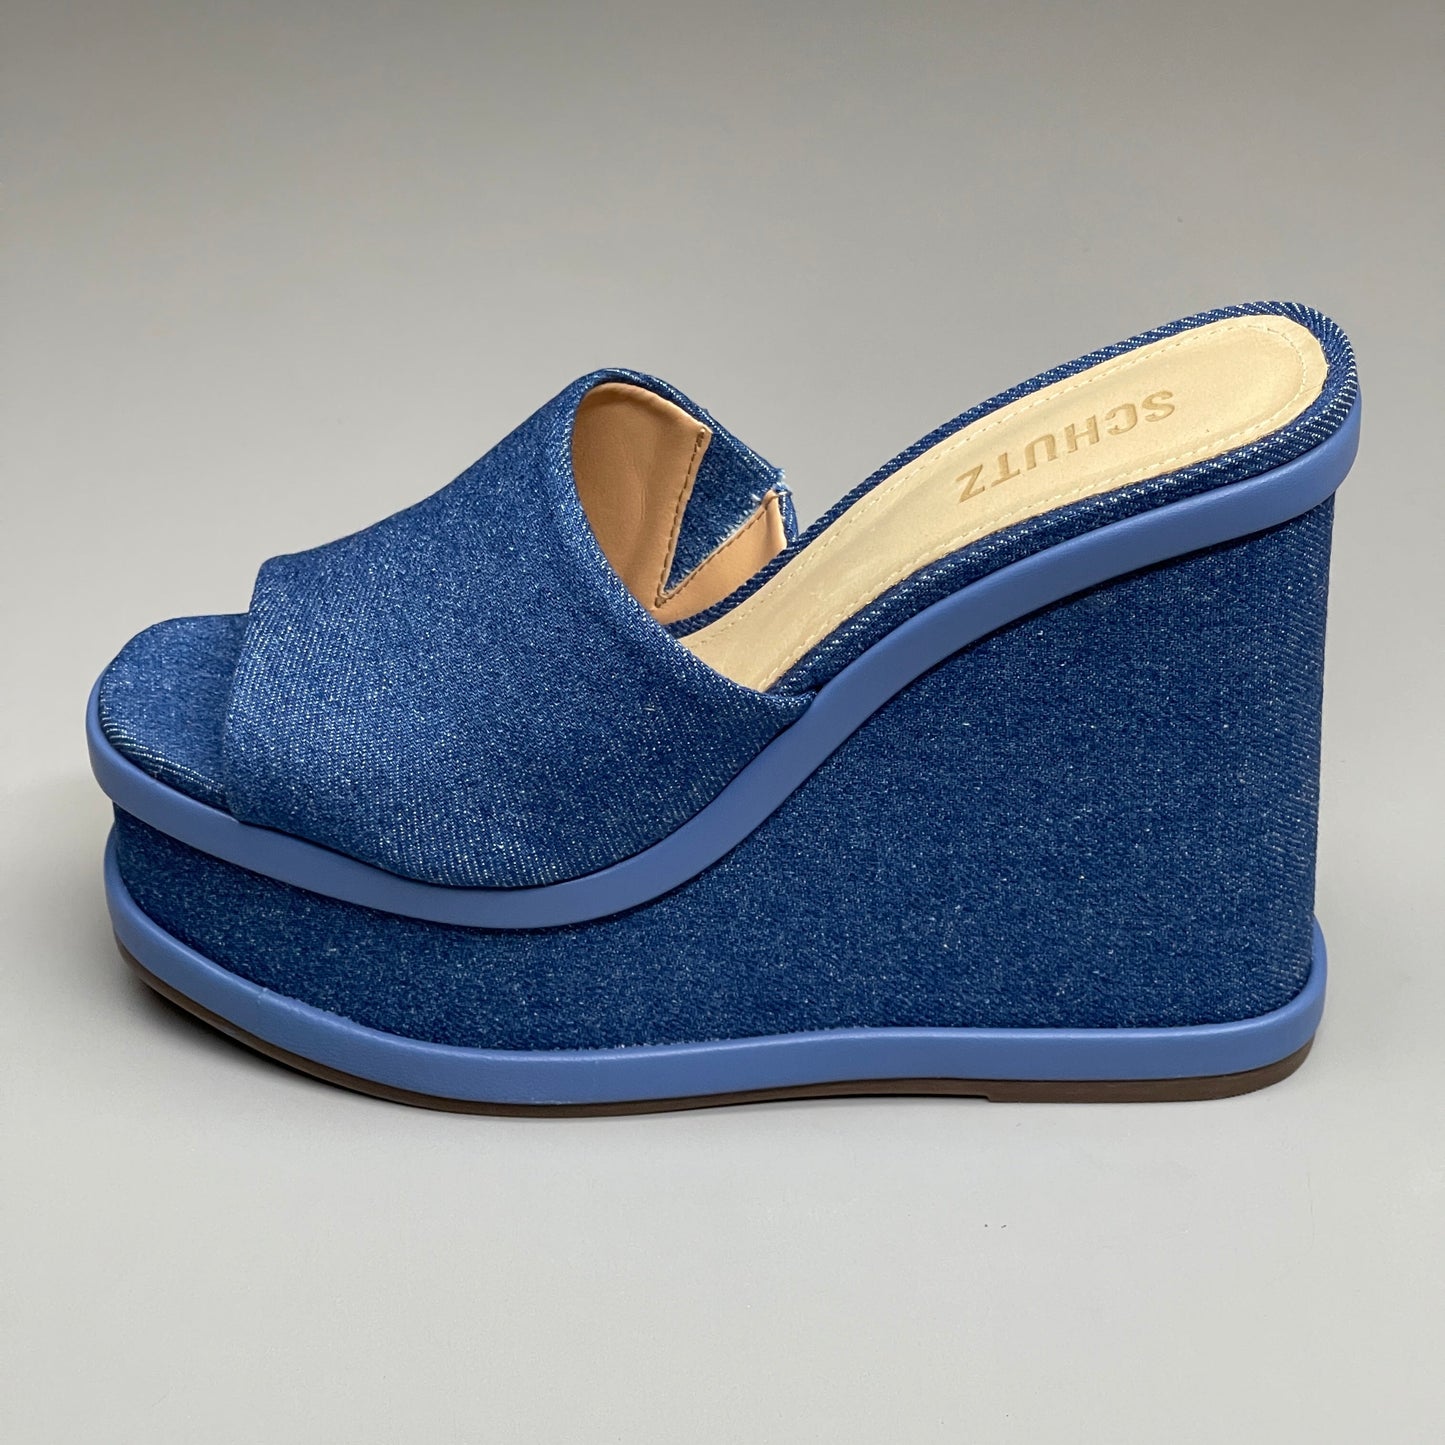 SCHUTZ Dalle Denim Women's Wedge Sandal Blue Platform Shoe Sz 10.5B (New)